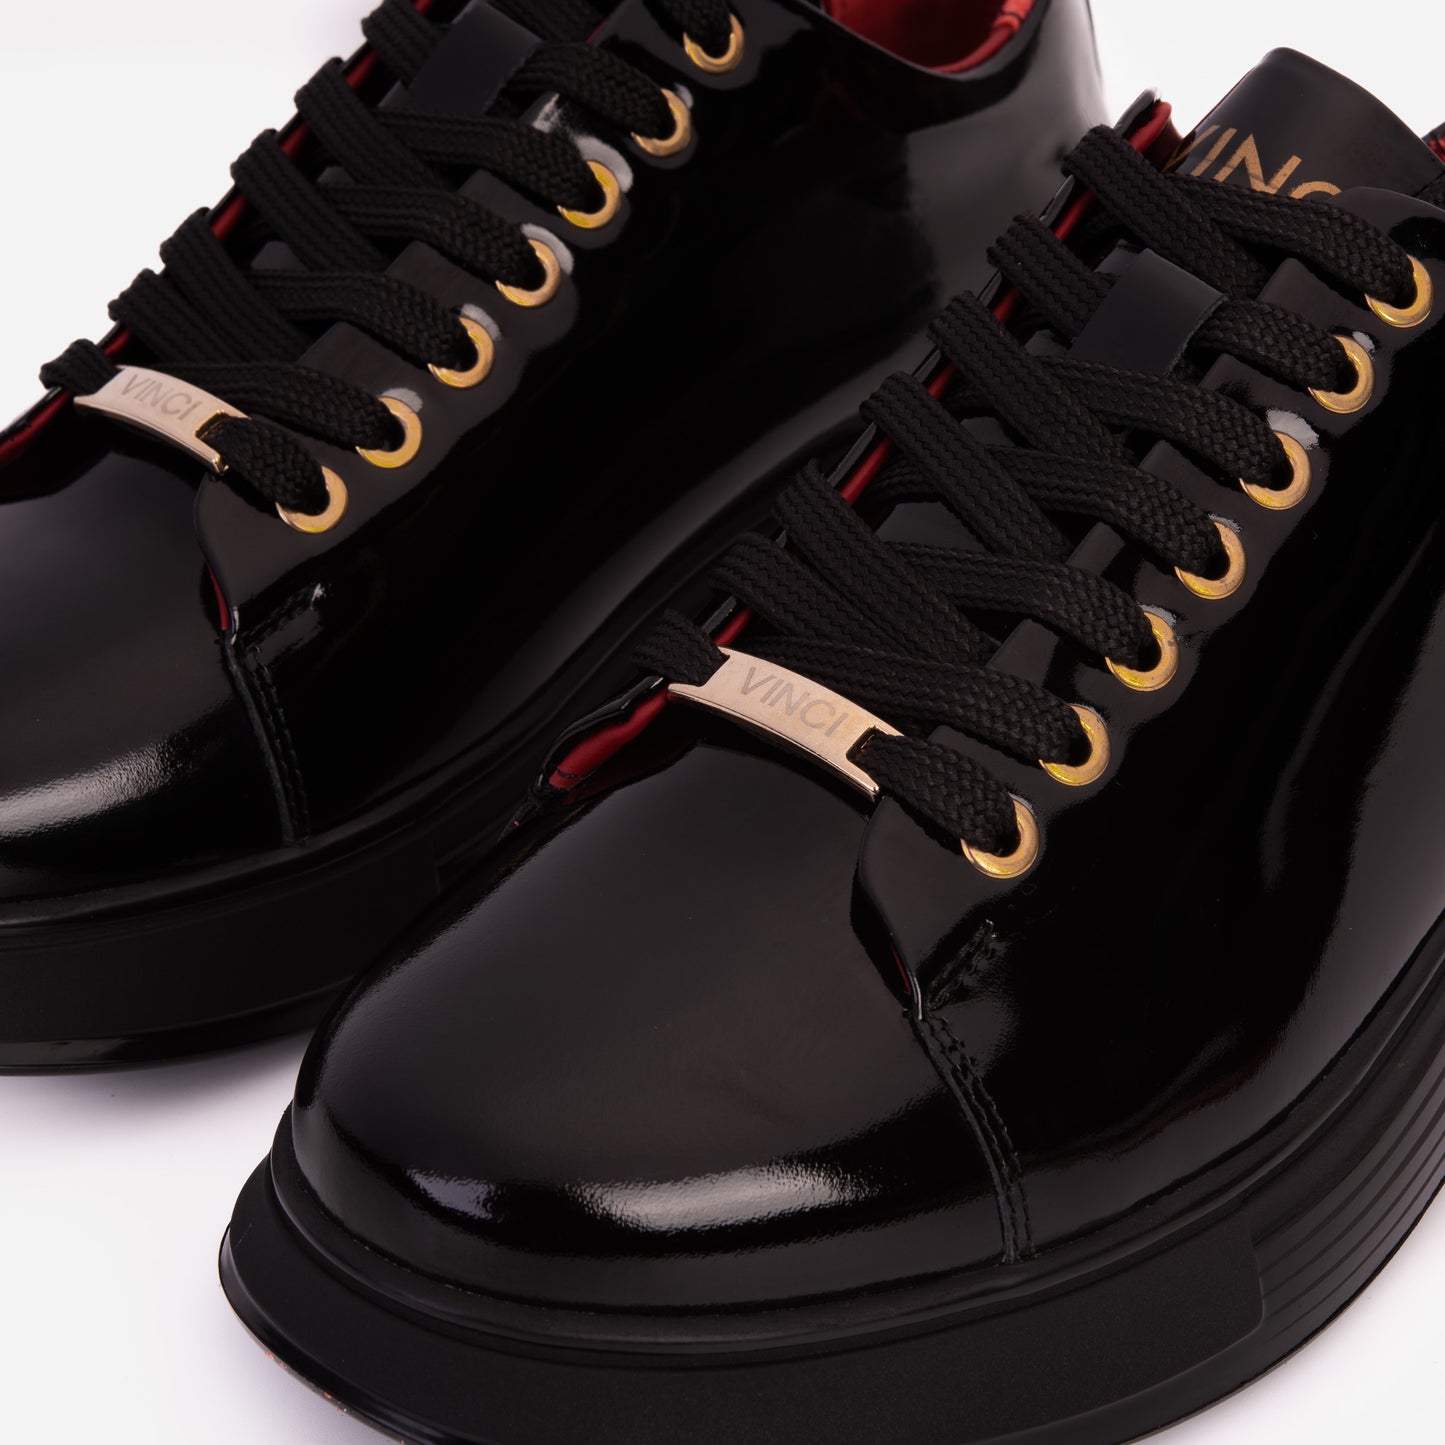 The Peklin Patent Black Leather Men Sneaker